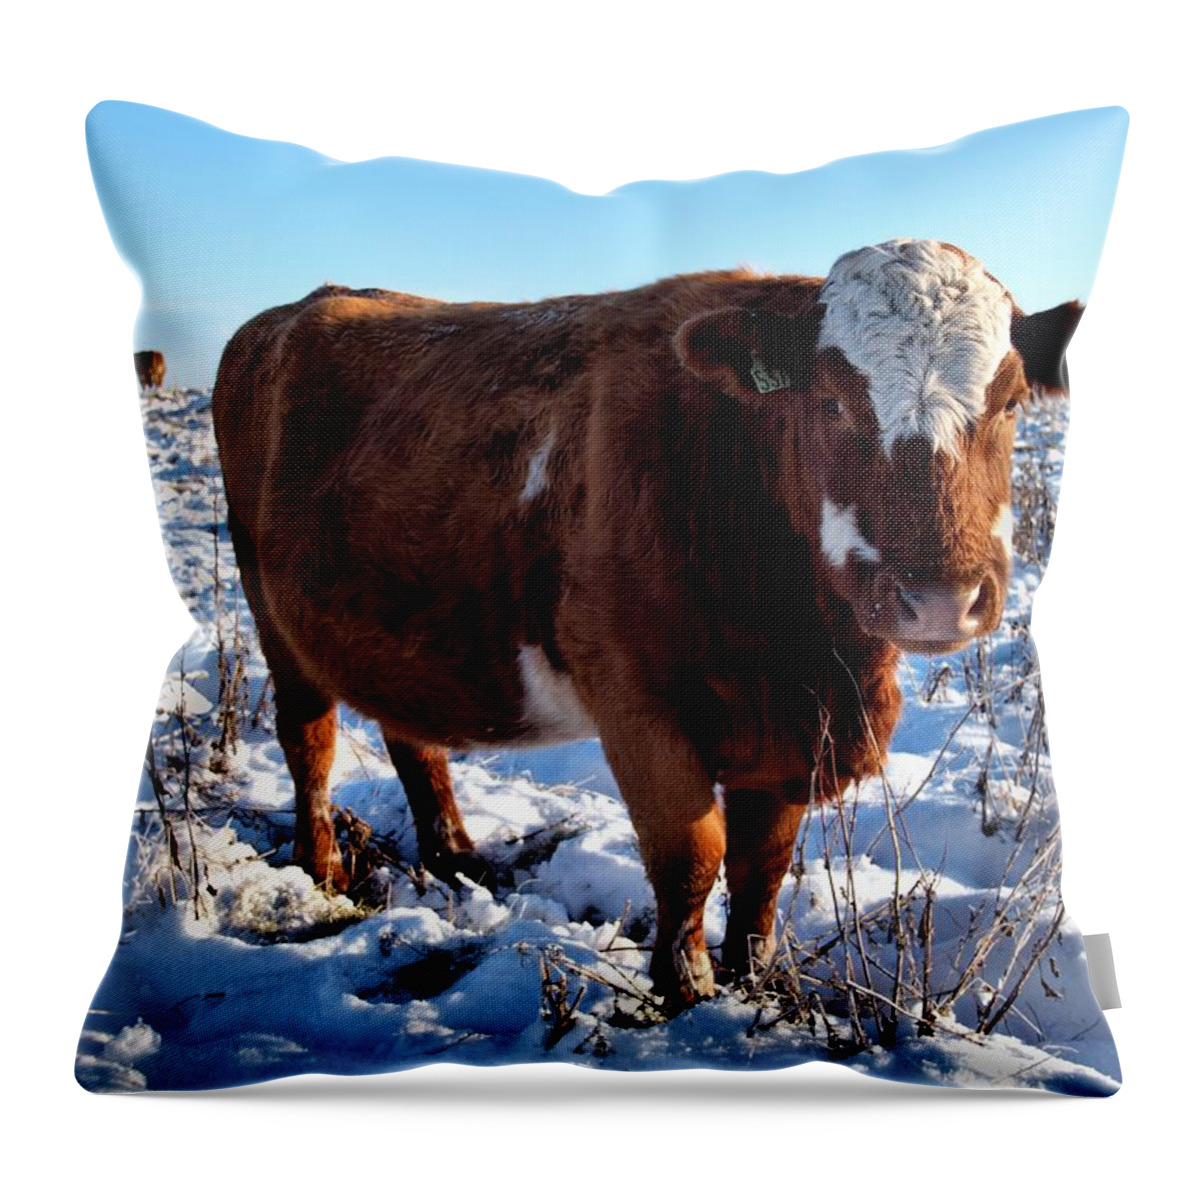 Snow Throw Pillow featuring the photograph Cattle In Snow Field by Calum Davidson - Calum Davidson Dot Com